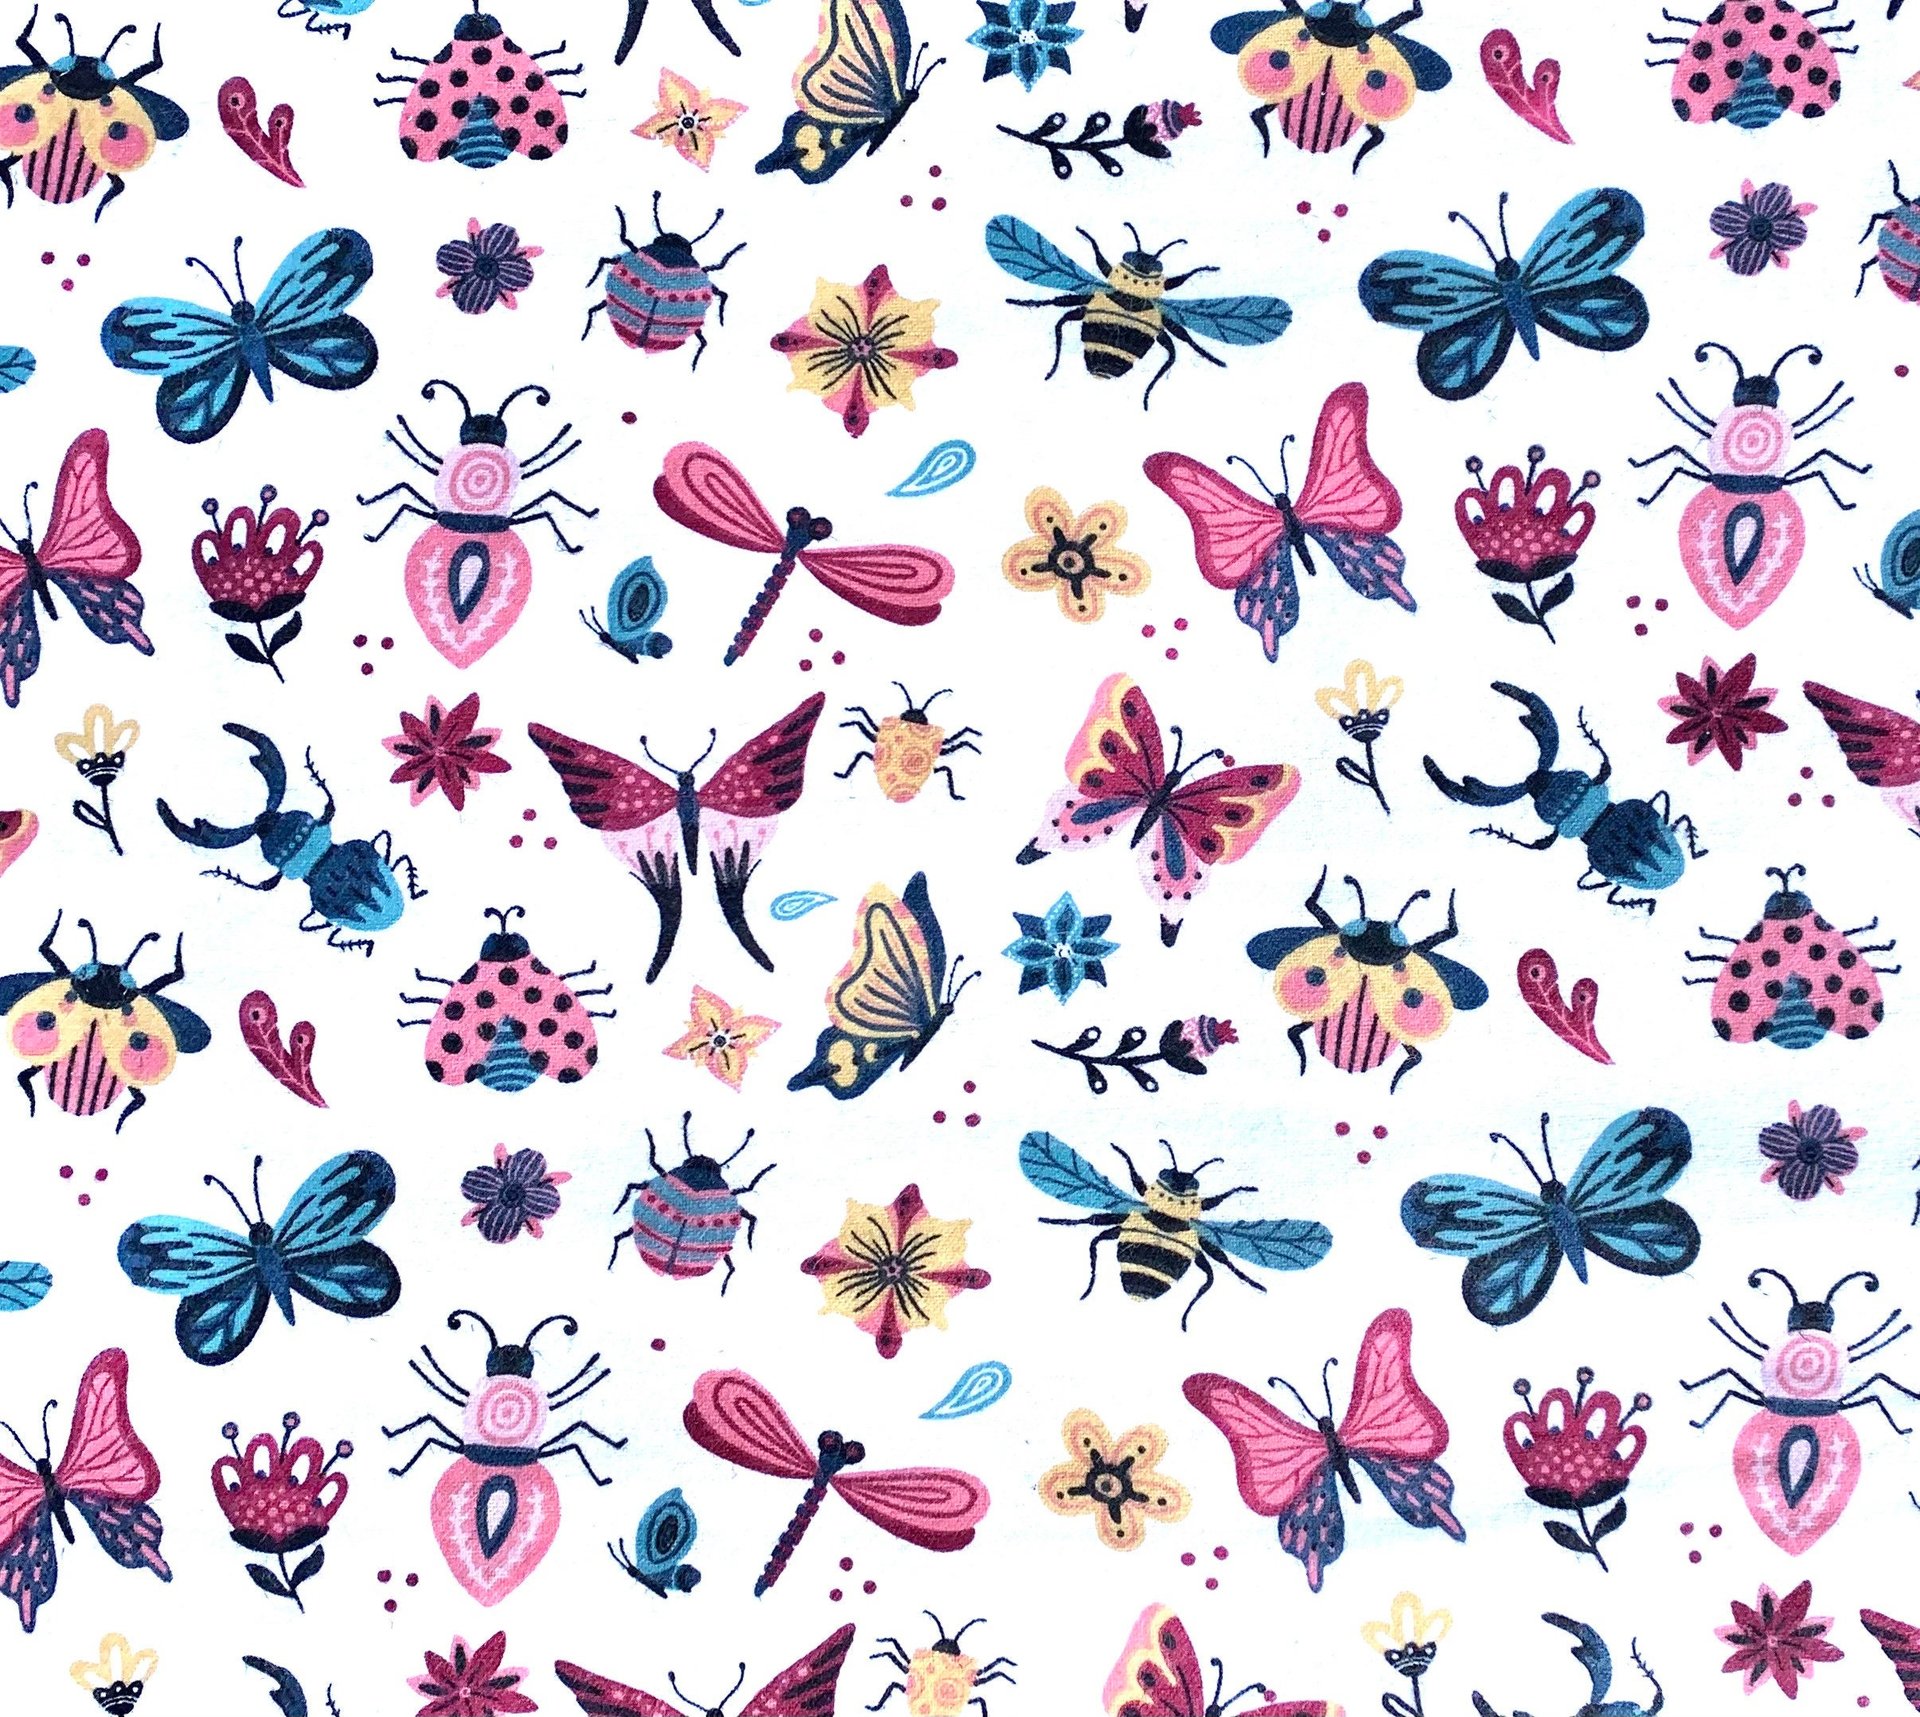 Bugs Beetles & Butterflies Paperless Towels || Unpaper Towels || Eco Kitchen